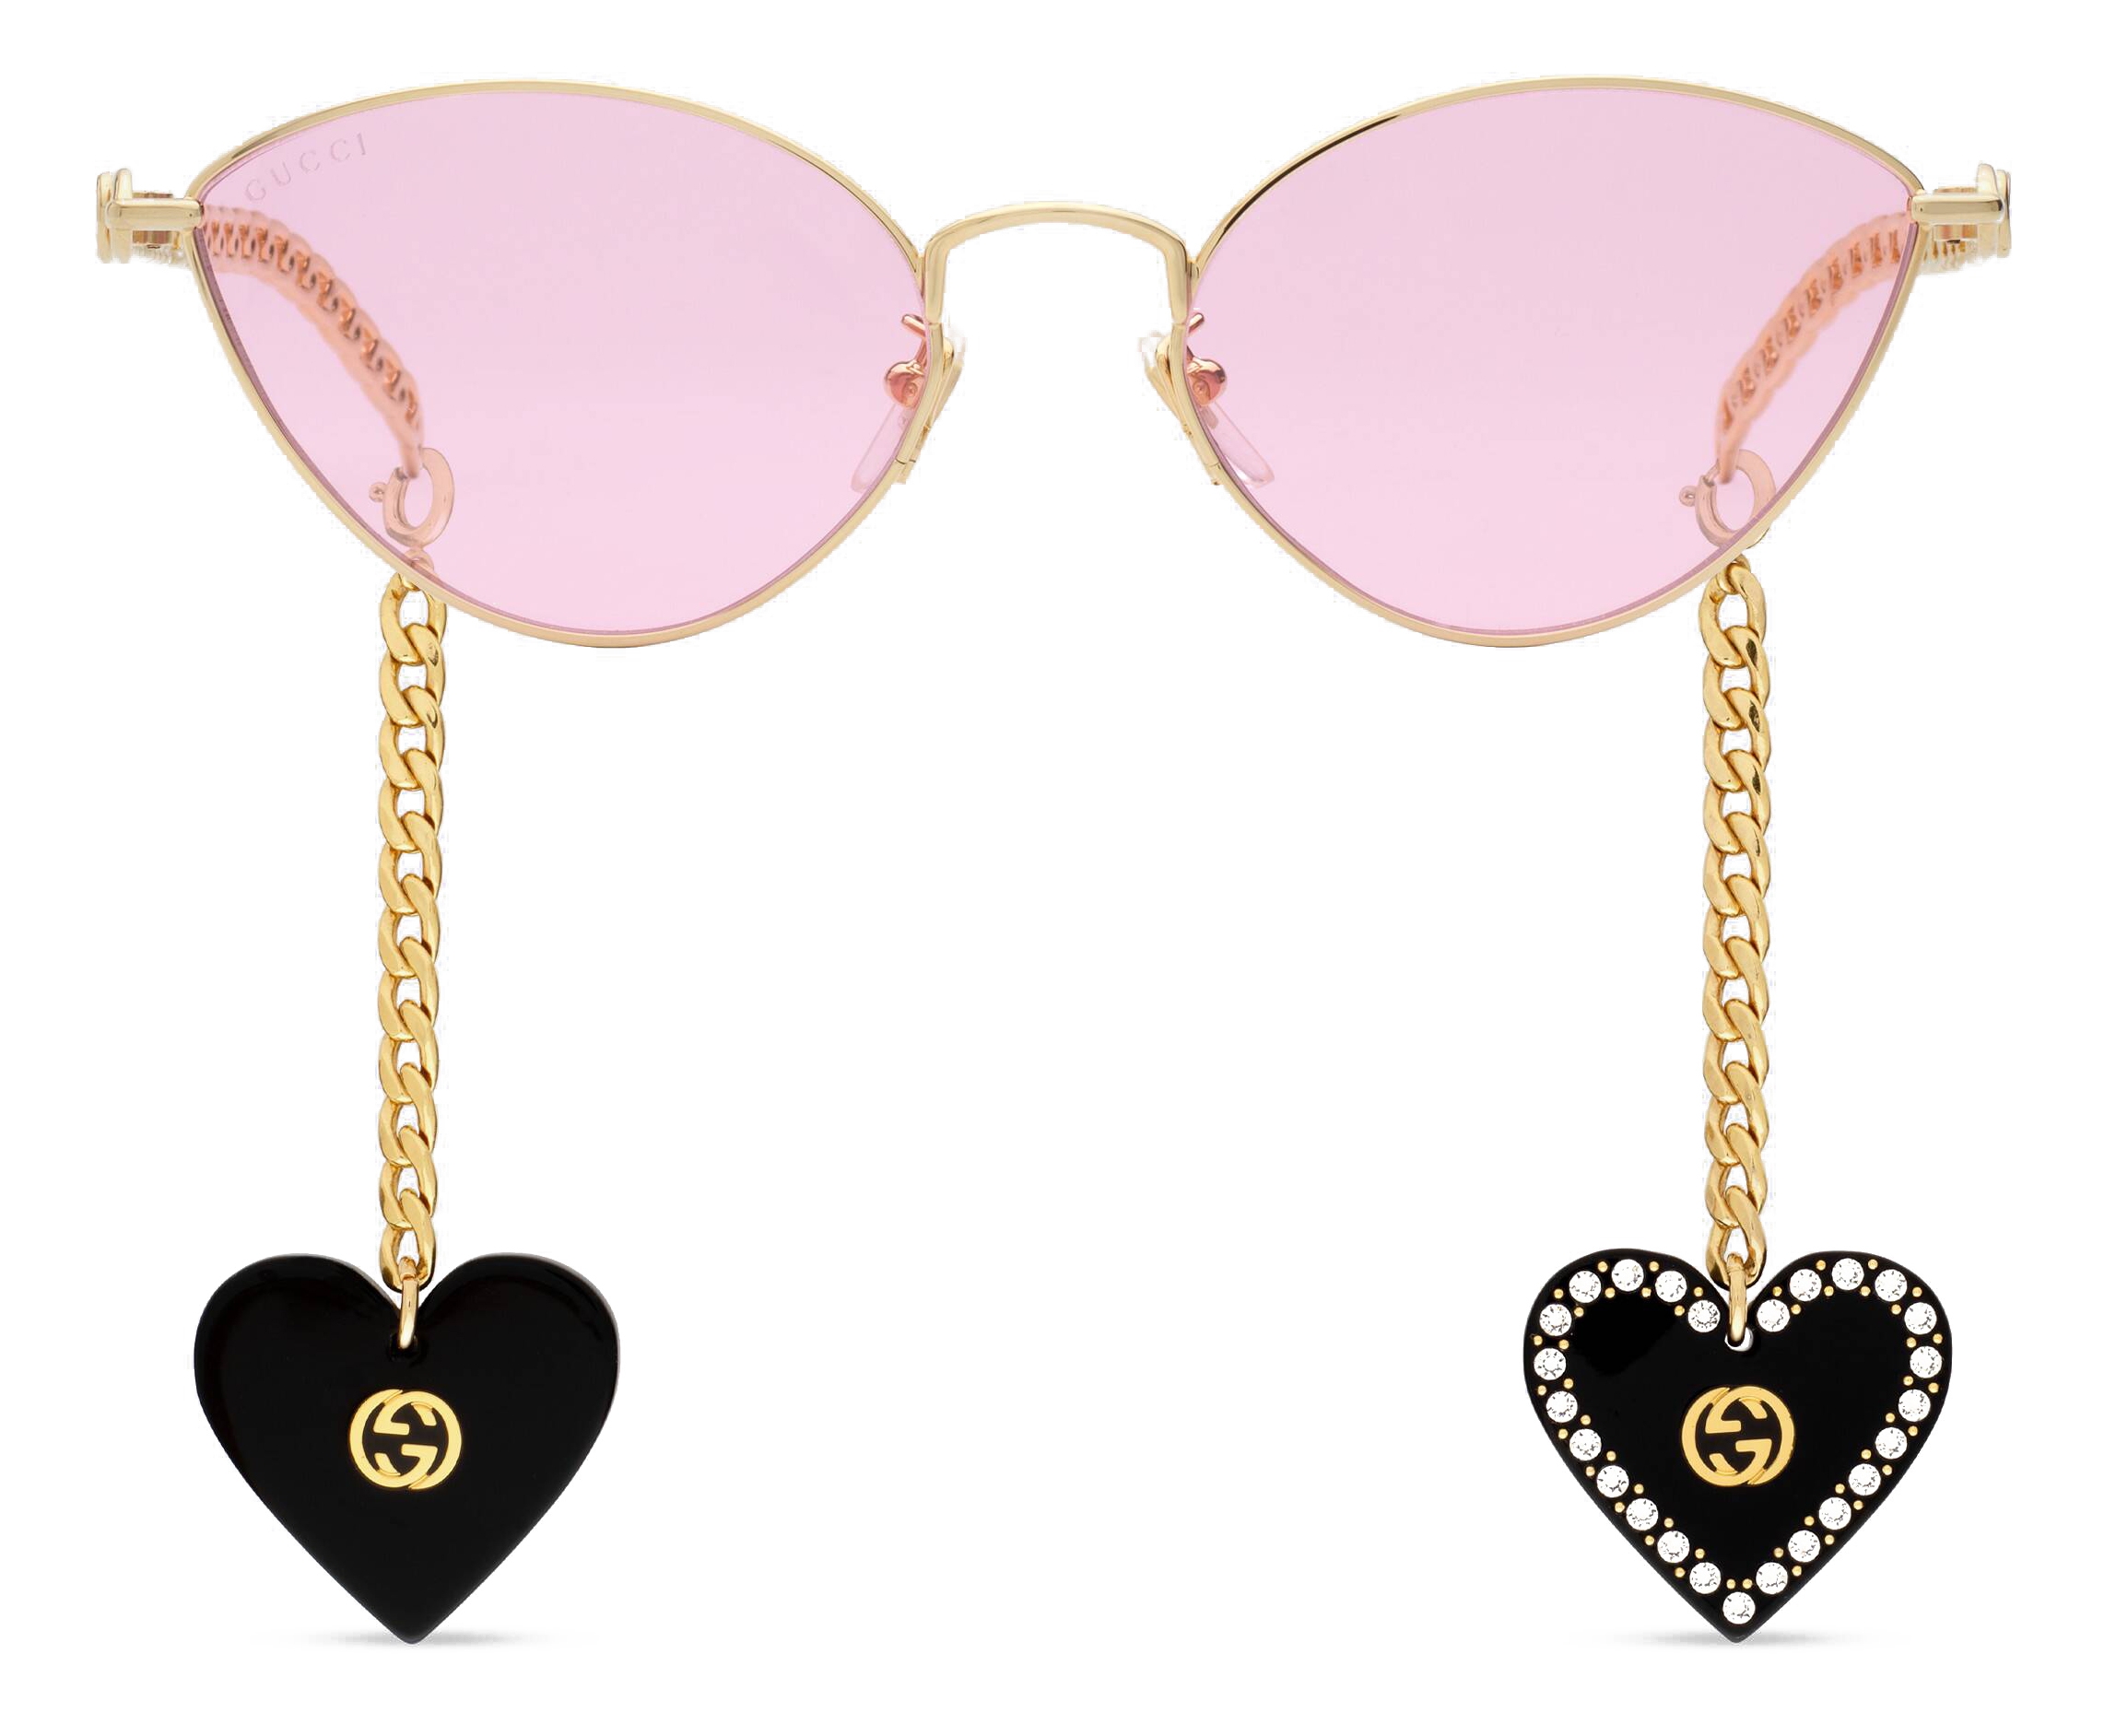 Pink gold cat eye sunglasses